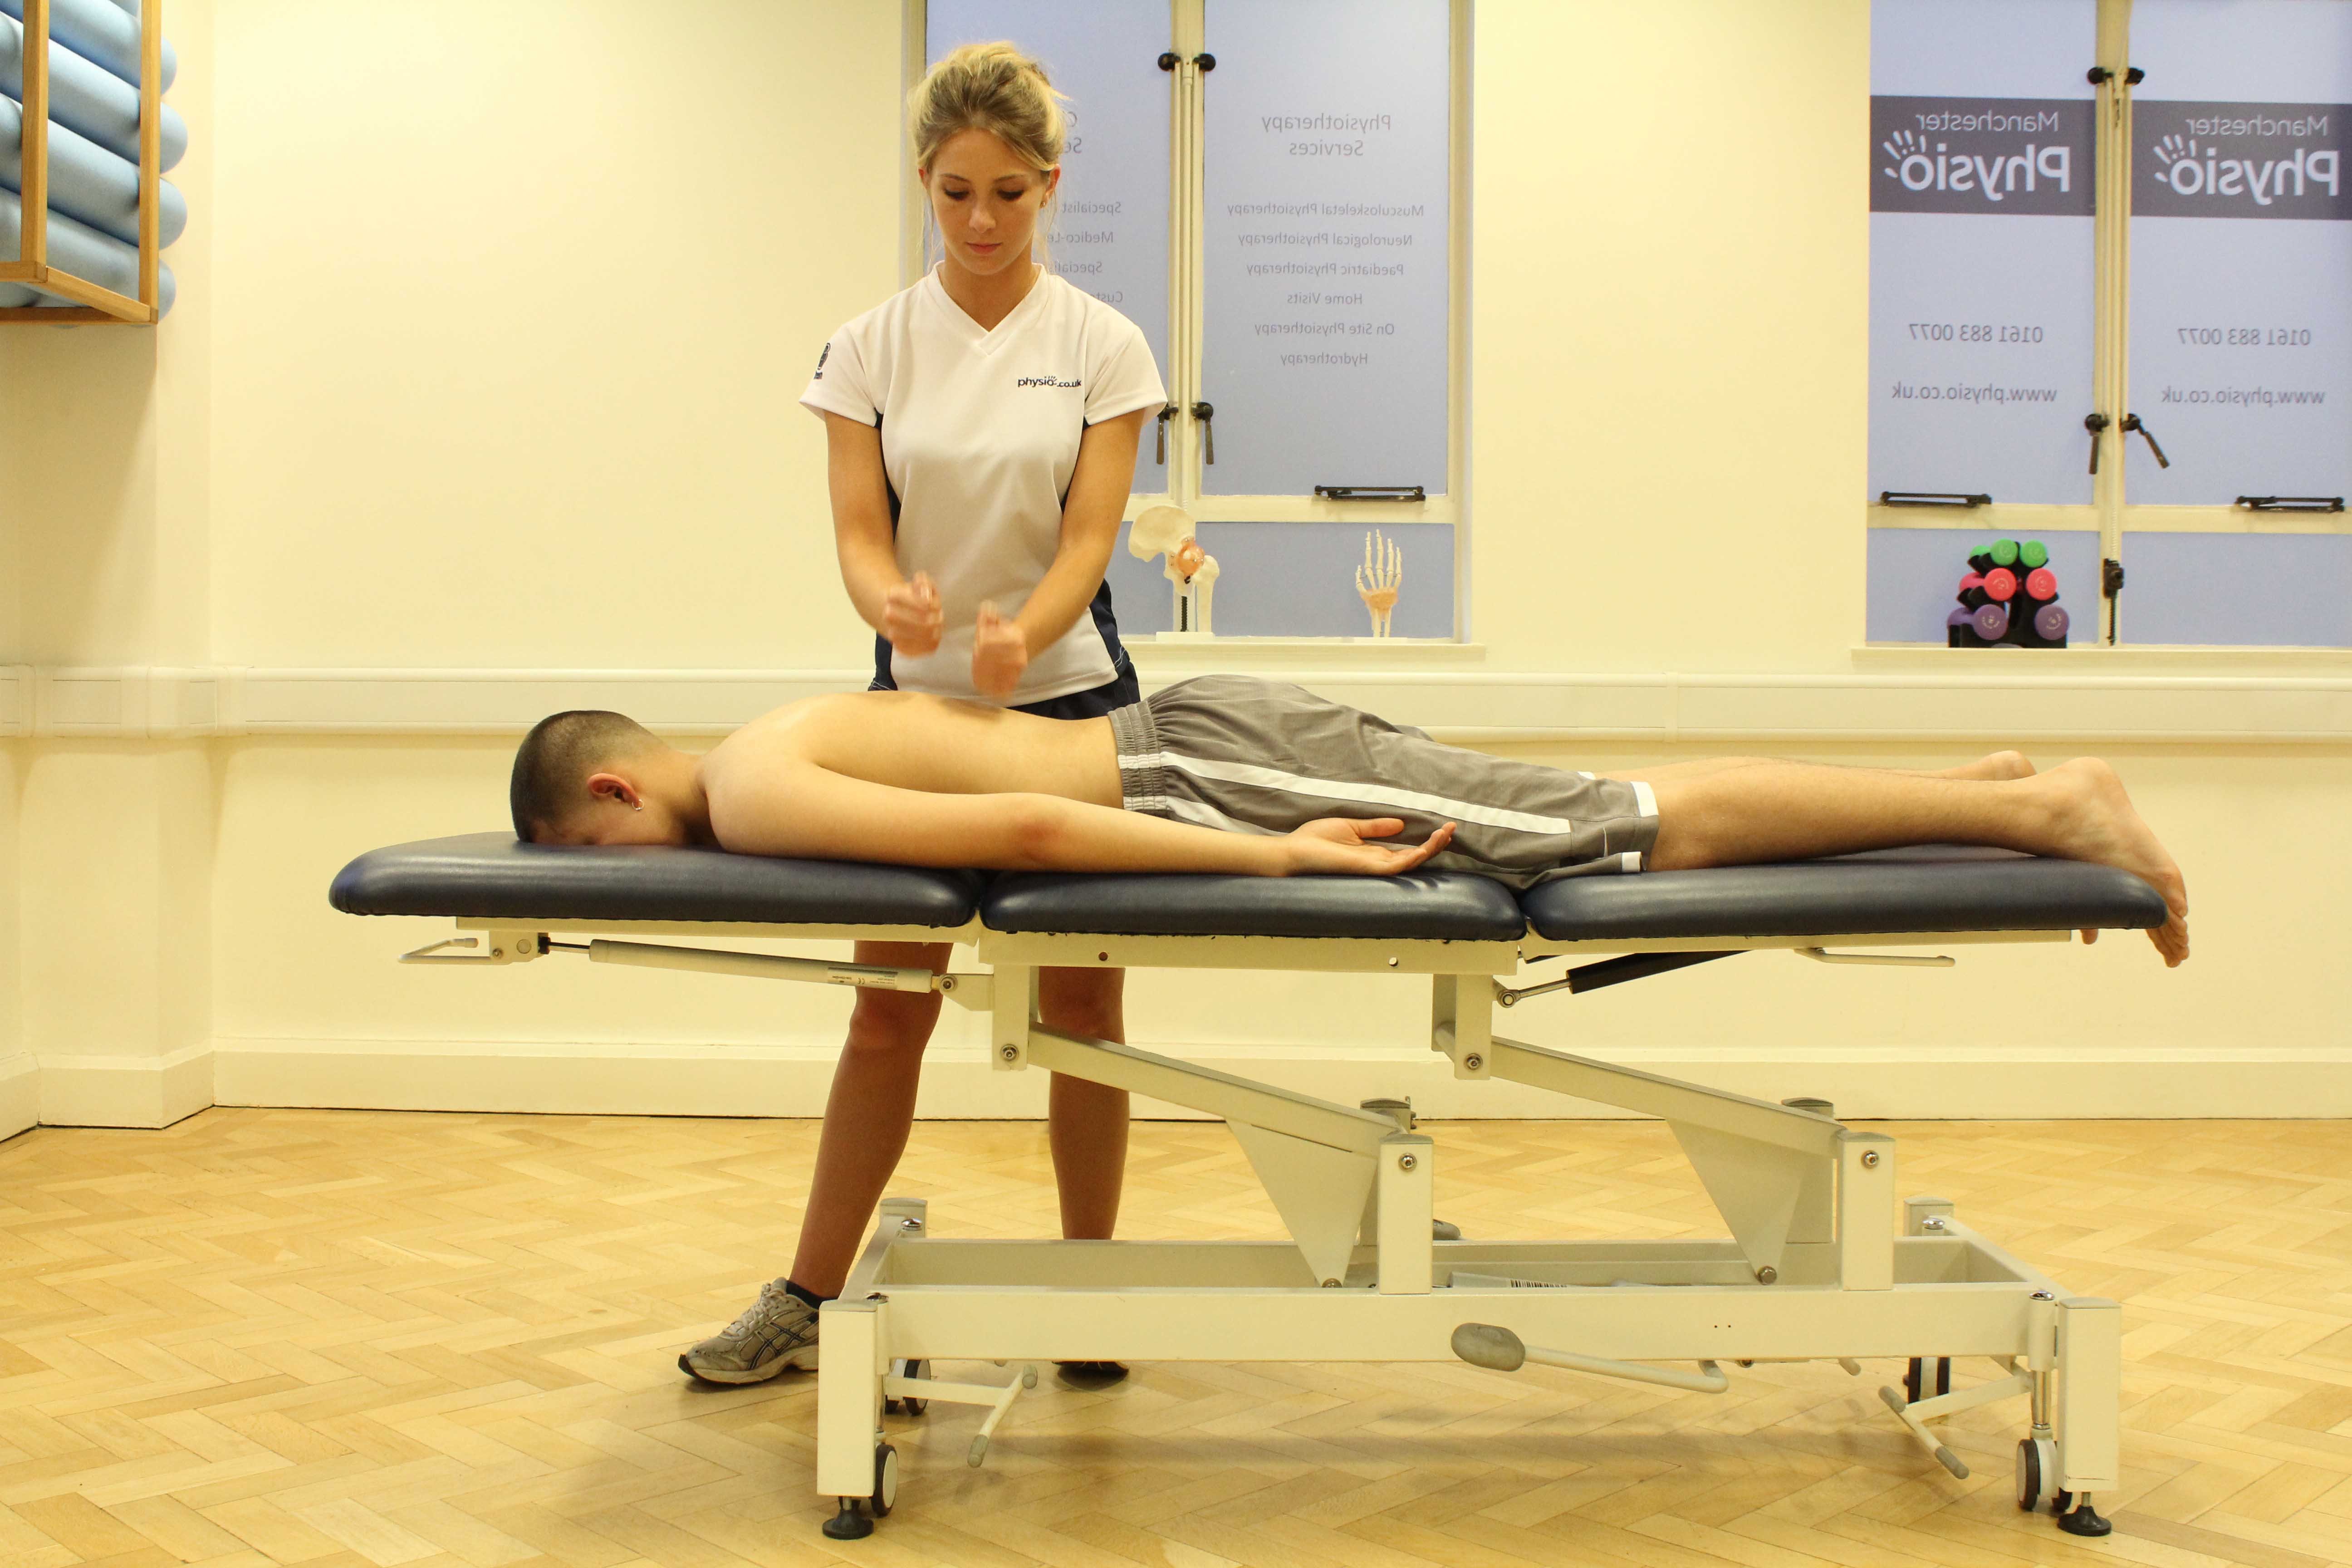 Sports massage focused on latissimus dorsi muscle using percussion technique